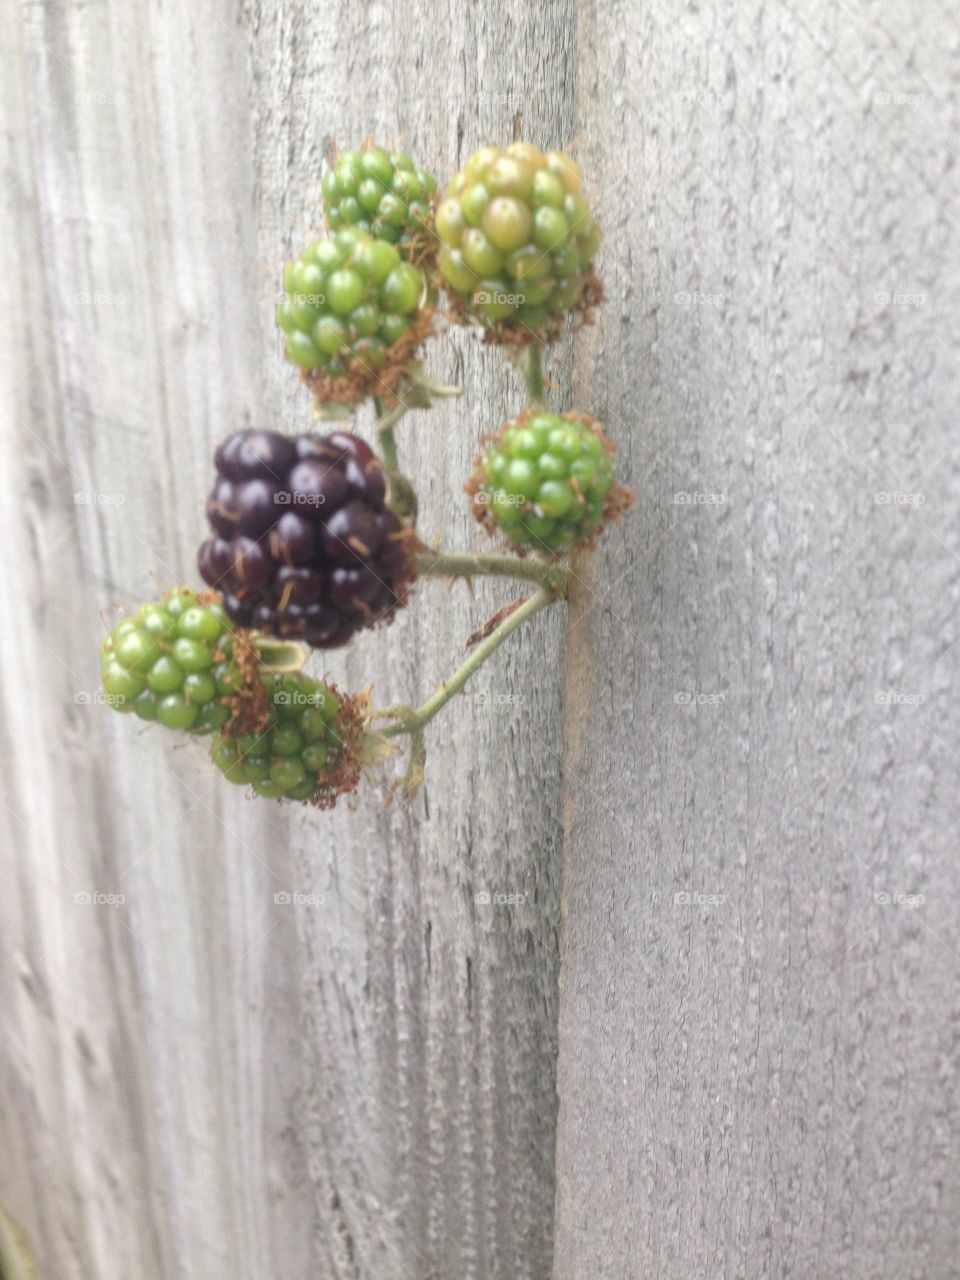 Blackberry growing through fence fruit berry uk